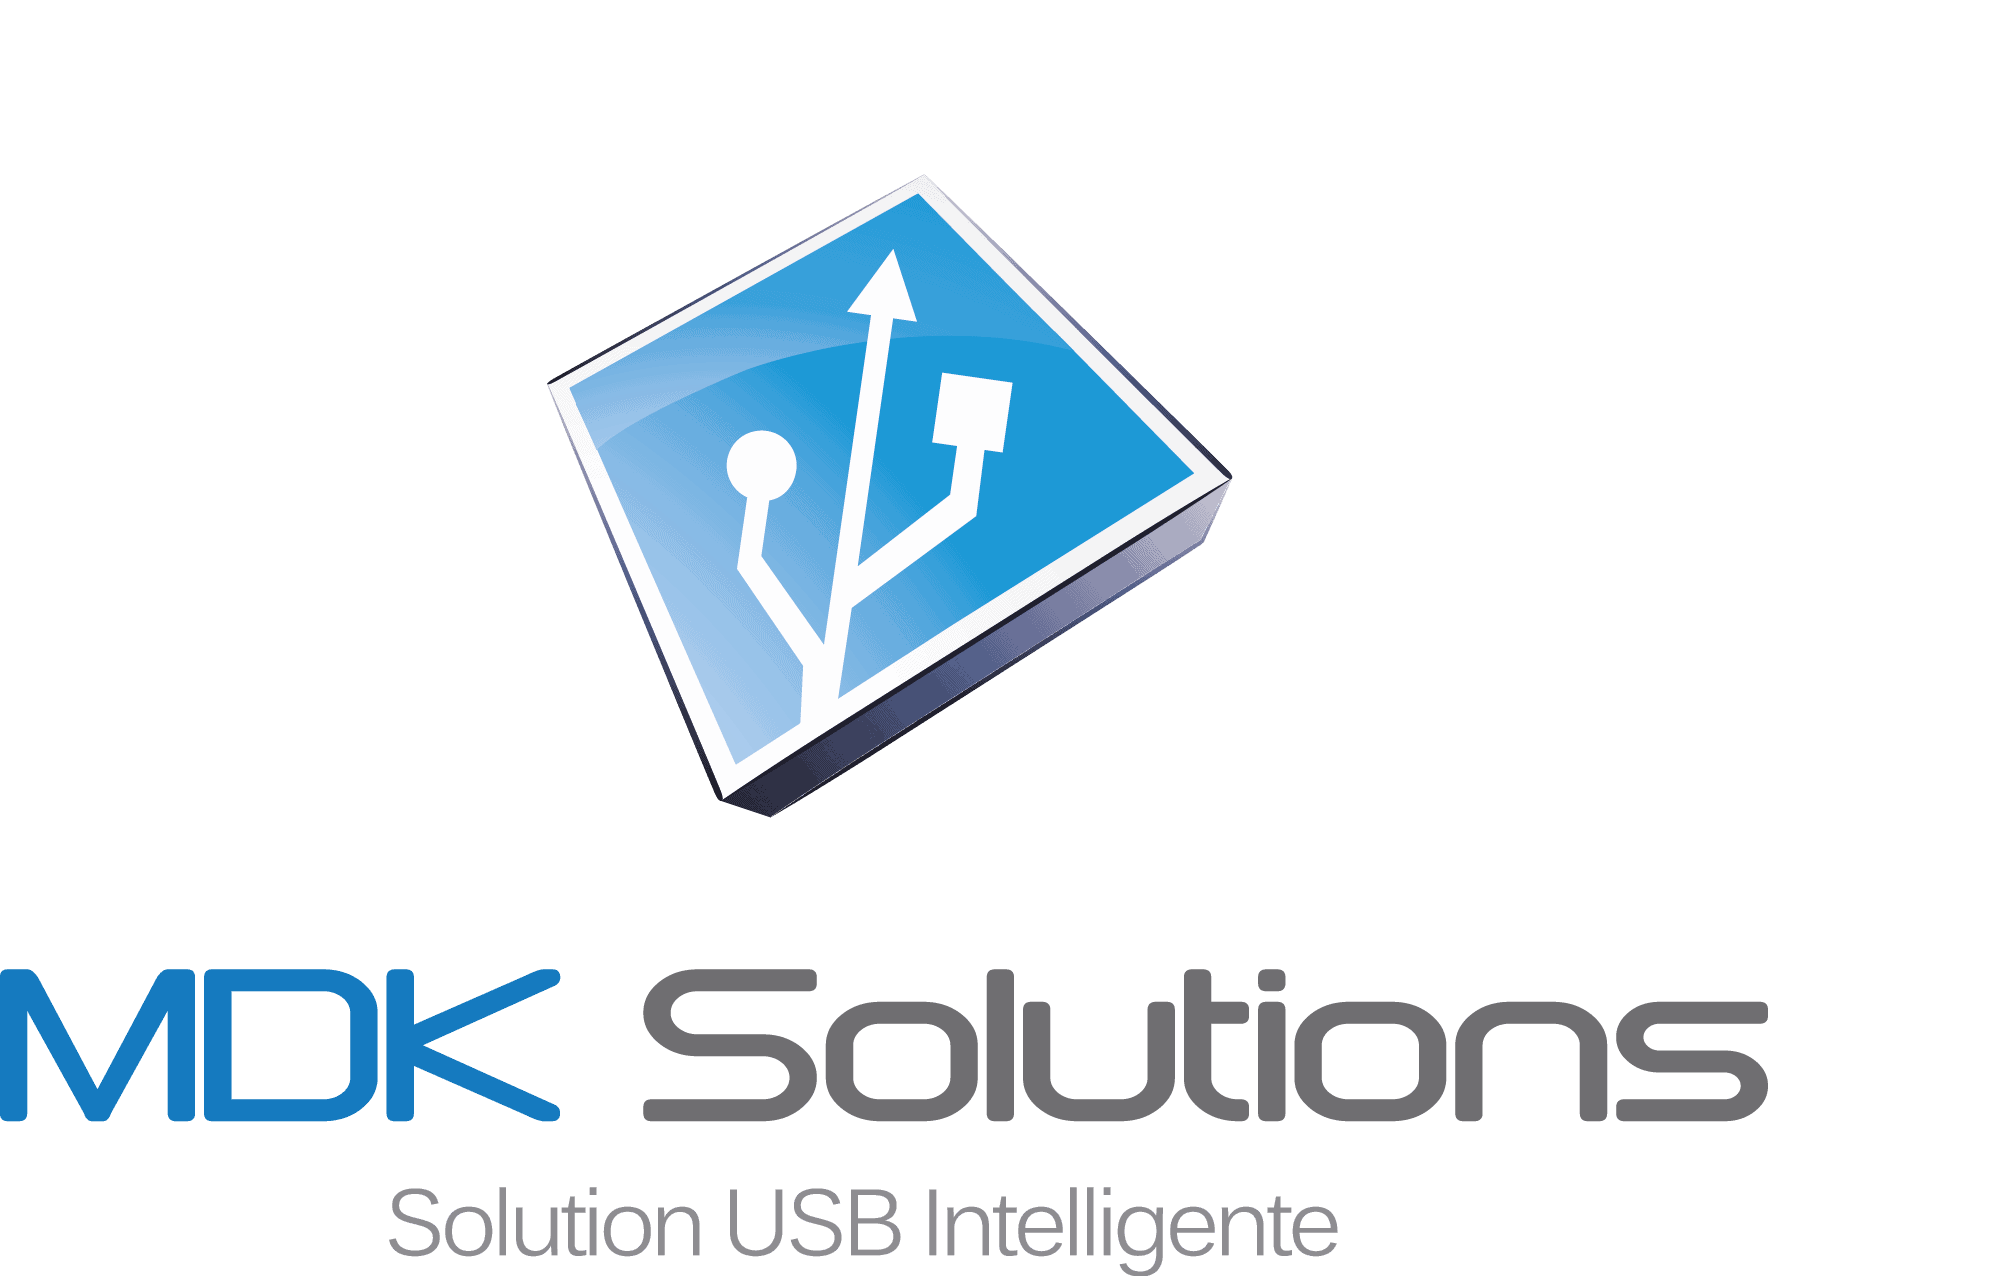 MDK Solutions